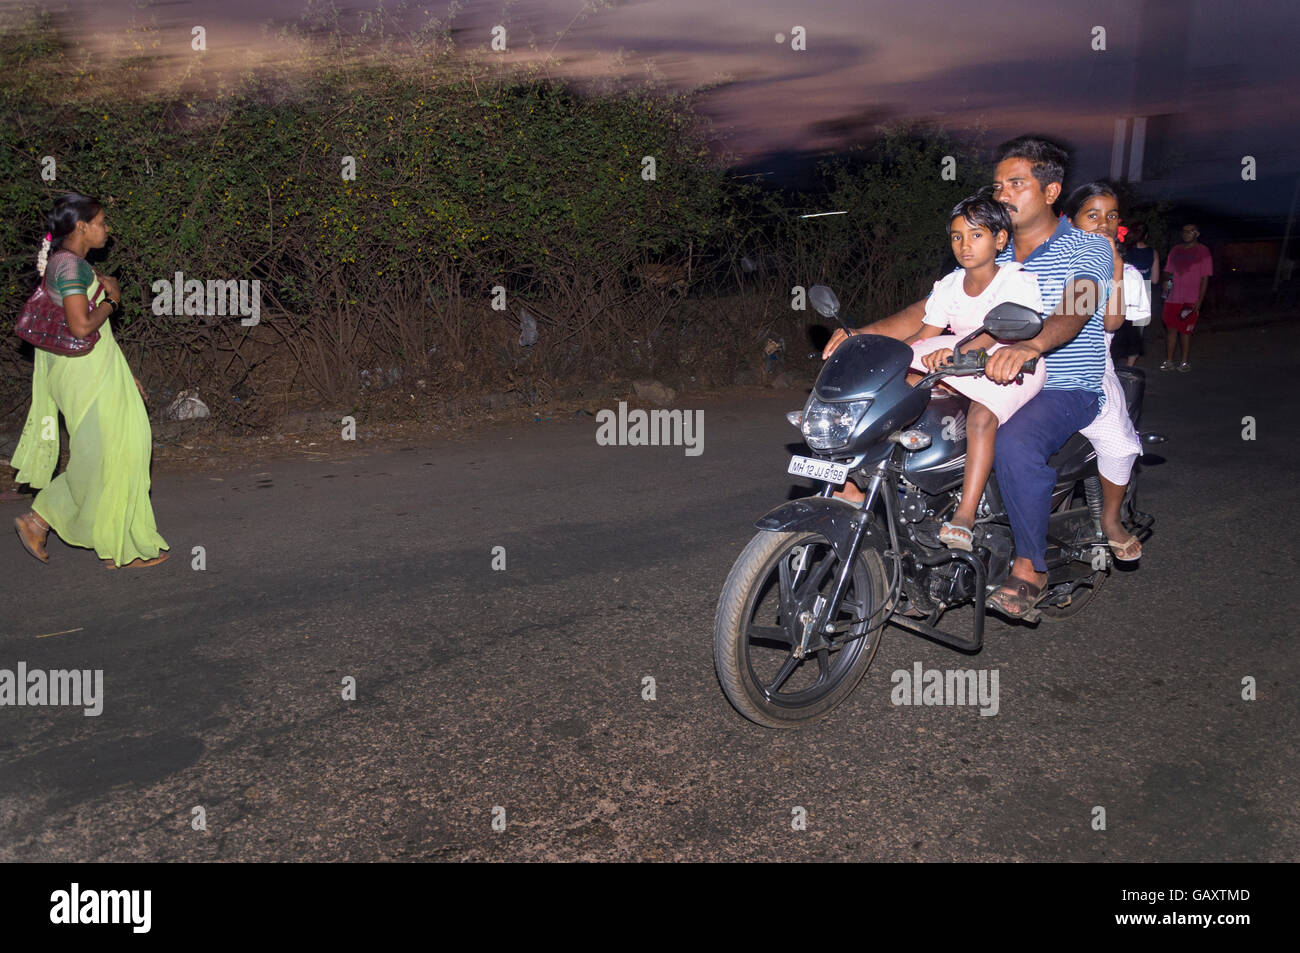 Man with children on motorbike in Paud village near Pune, Maharashtra, India. Stock Photo